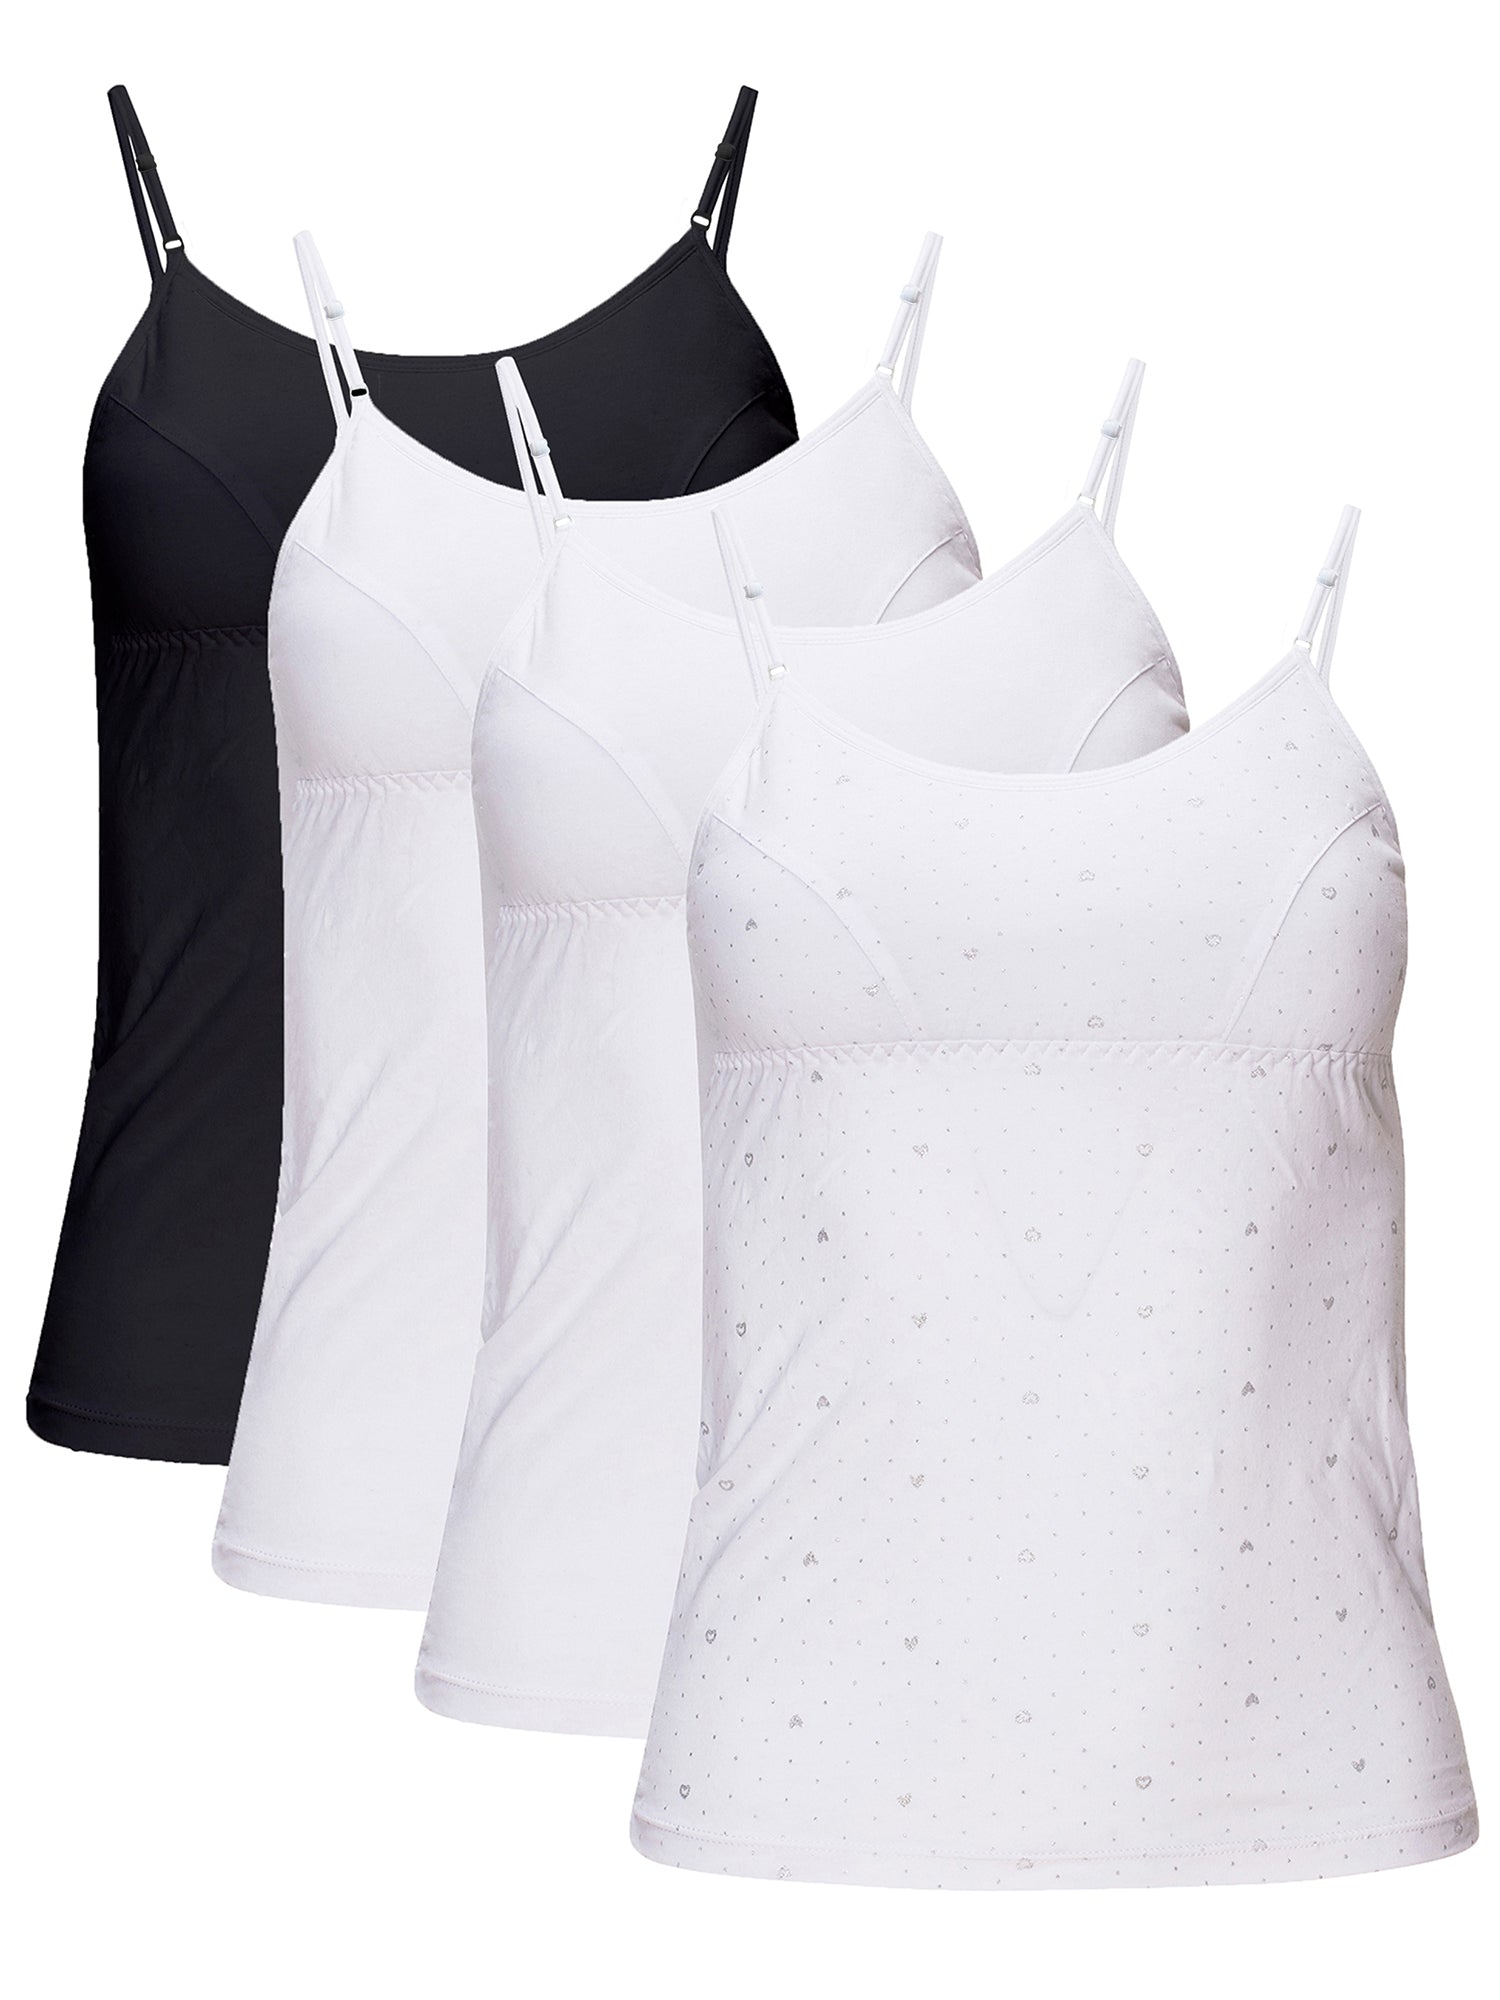 Women Basic Camisole With Shelf Bra Undershirts Adjustable Spaghetti Strap  Tank